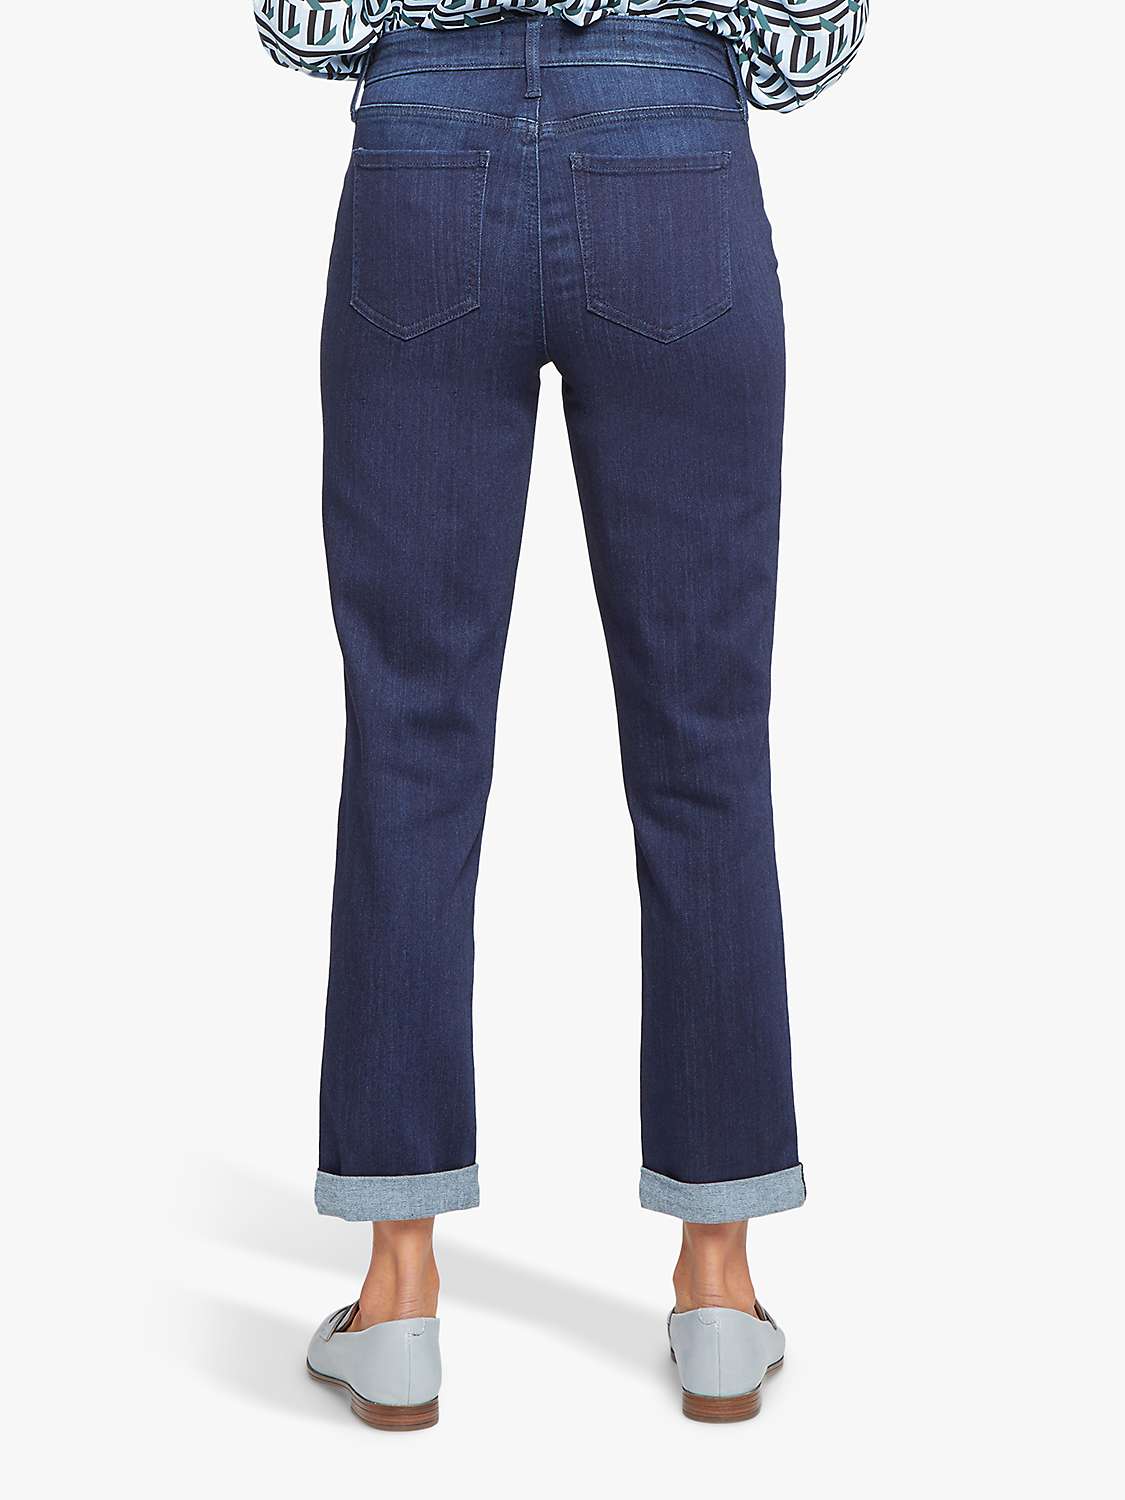 Buy NYDJ Petite Margot Girlfriend Roll Cuff Jeans, Highway Online at johnlewis.com